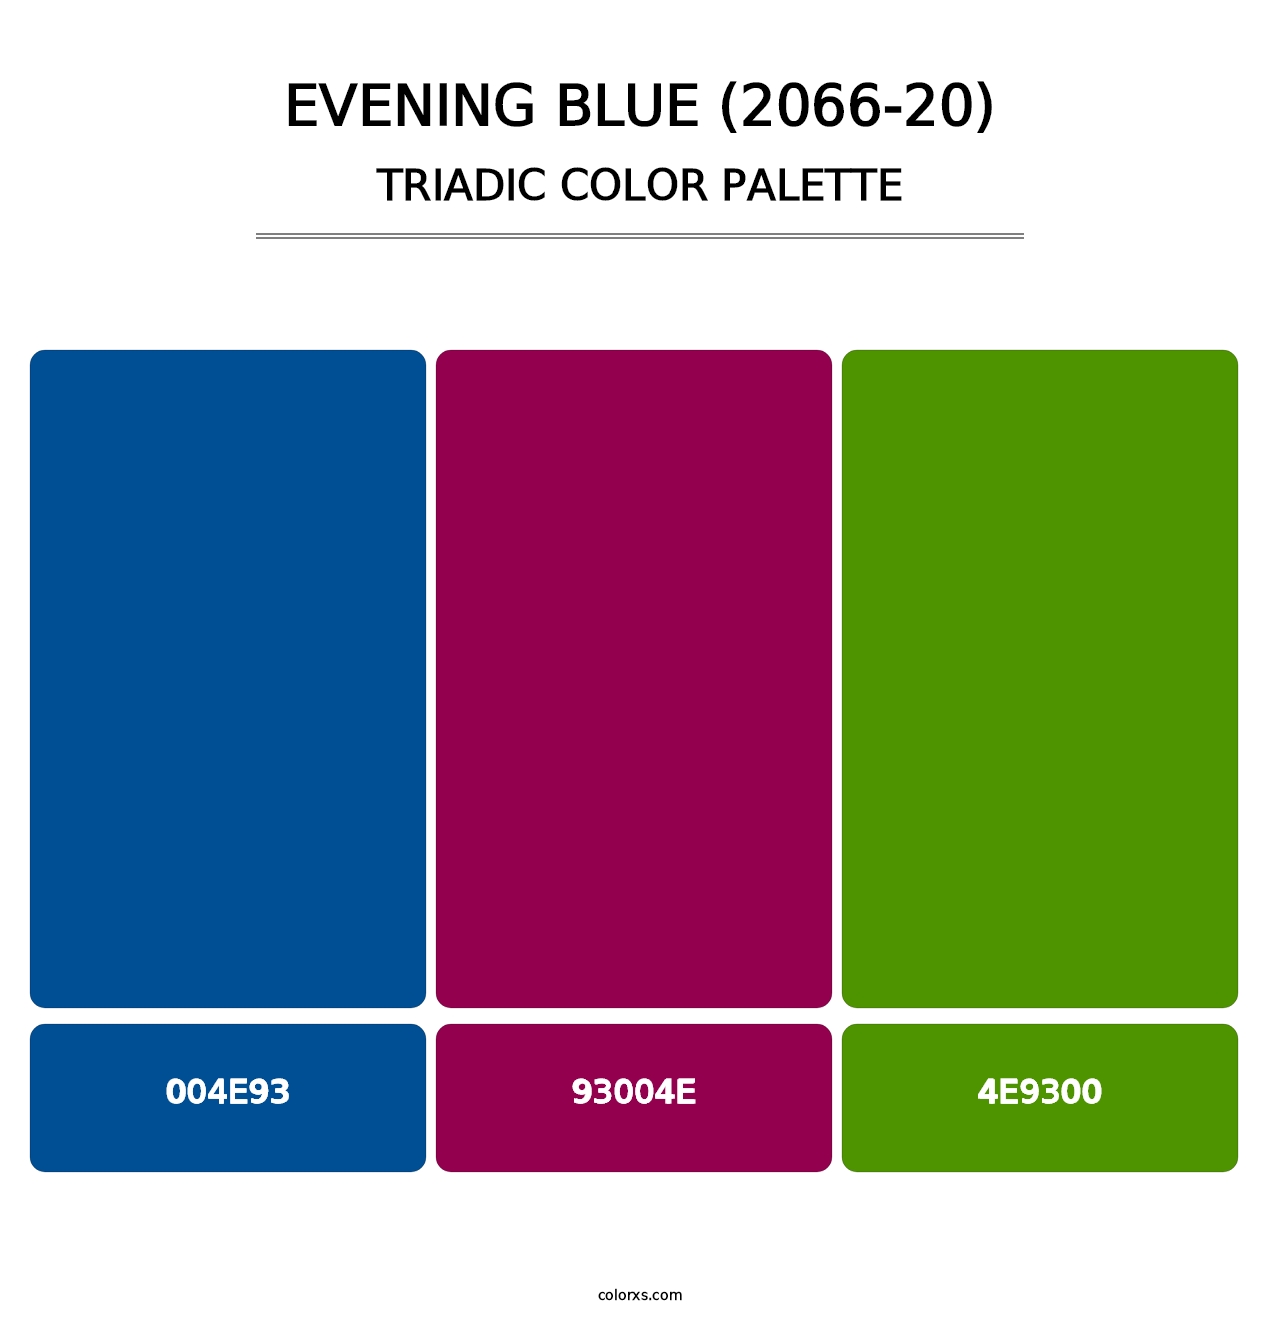 Evening Blue (2066-20) - Triadic Color Palette